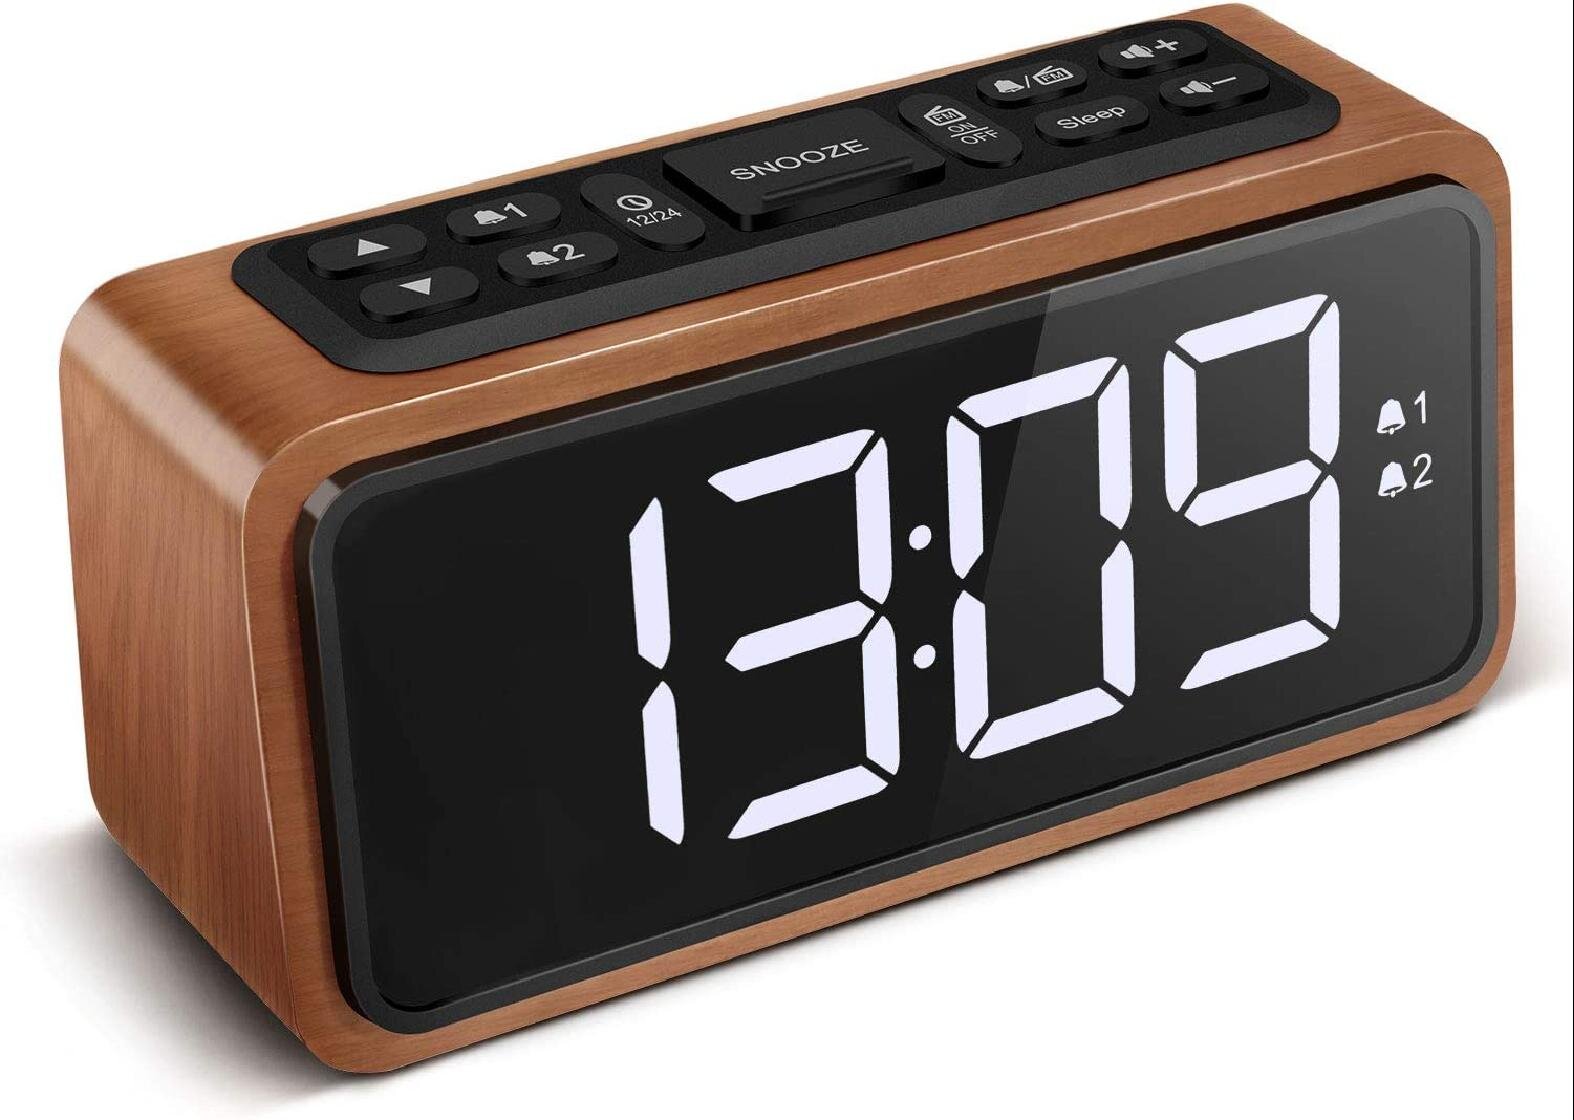 Adjustable Brightness Dimmer and Snooze Simple LED Clock with Dual Alarm Powered by AC Adapter Koosin Large LED Display Wood Digital Alarm Clock FM Radio Alarm Clock 12/24 Hour 